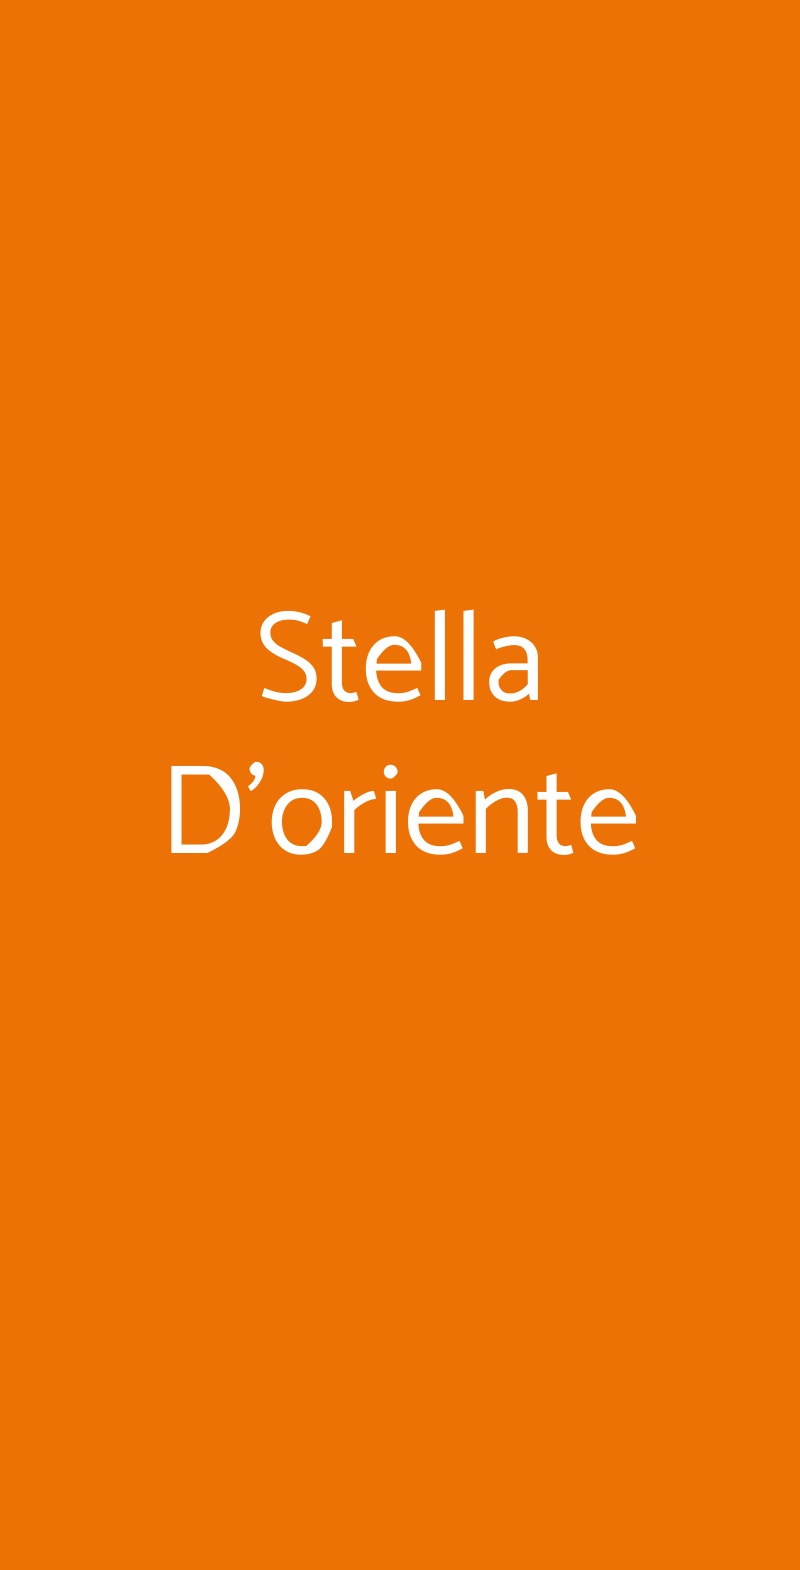 Ristorante Stella D'oriente Verona menù 1 pagina